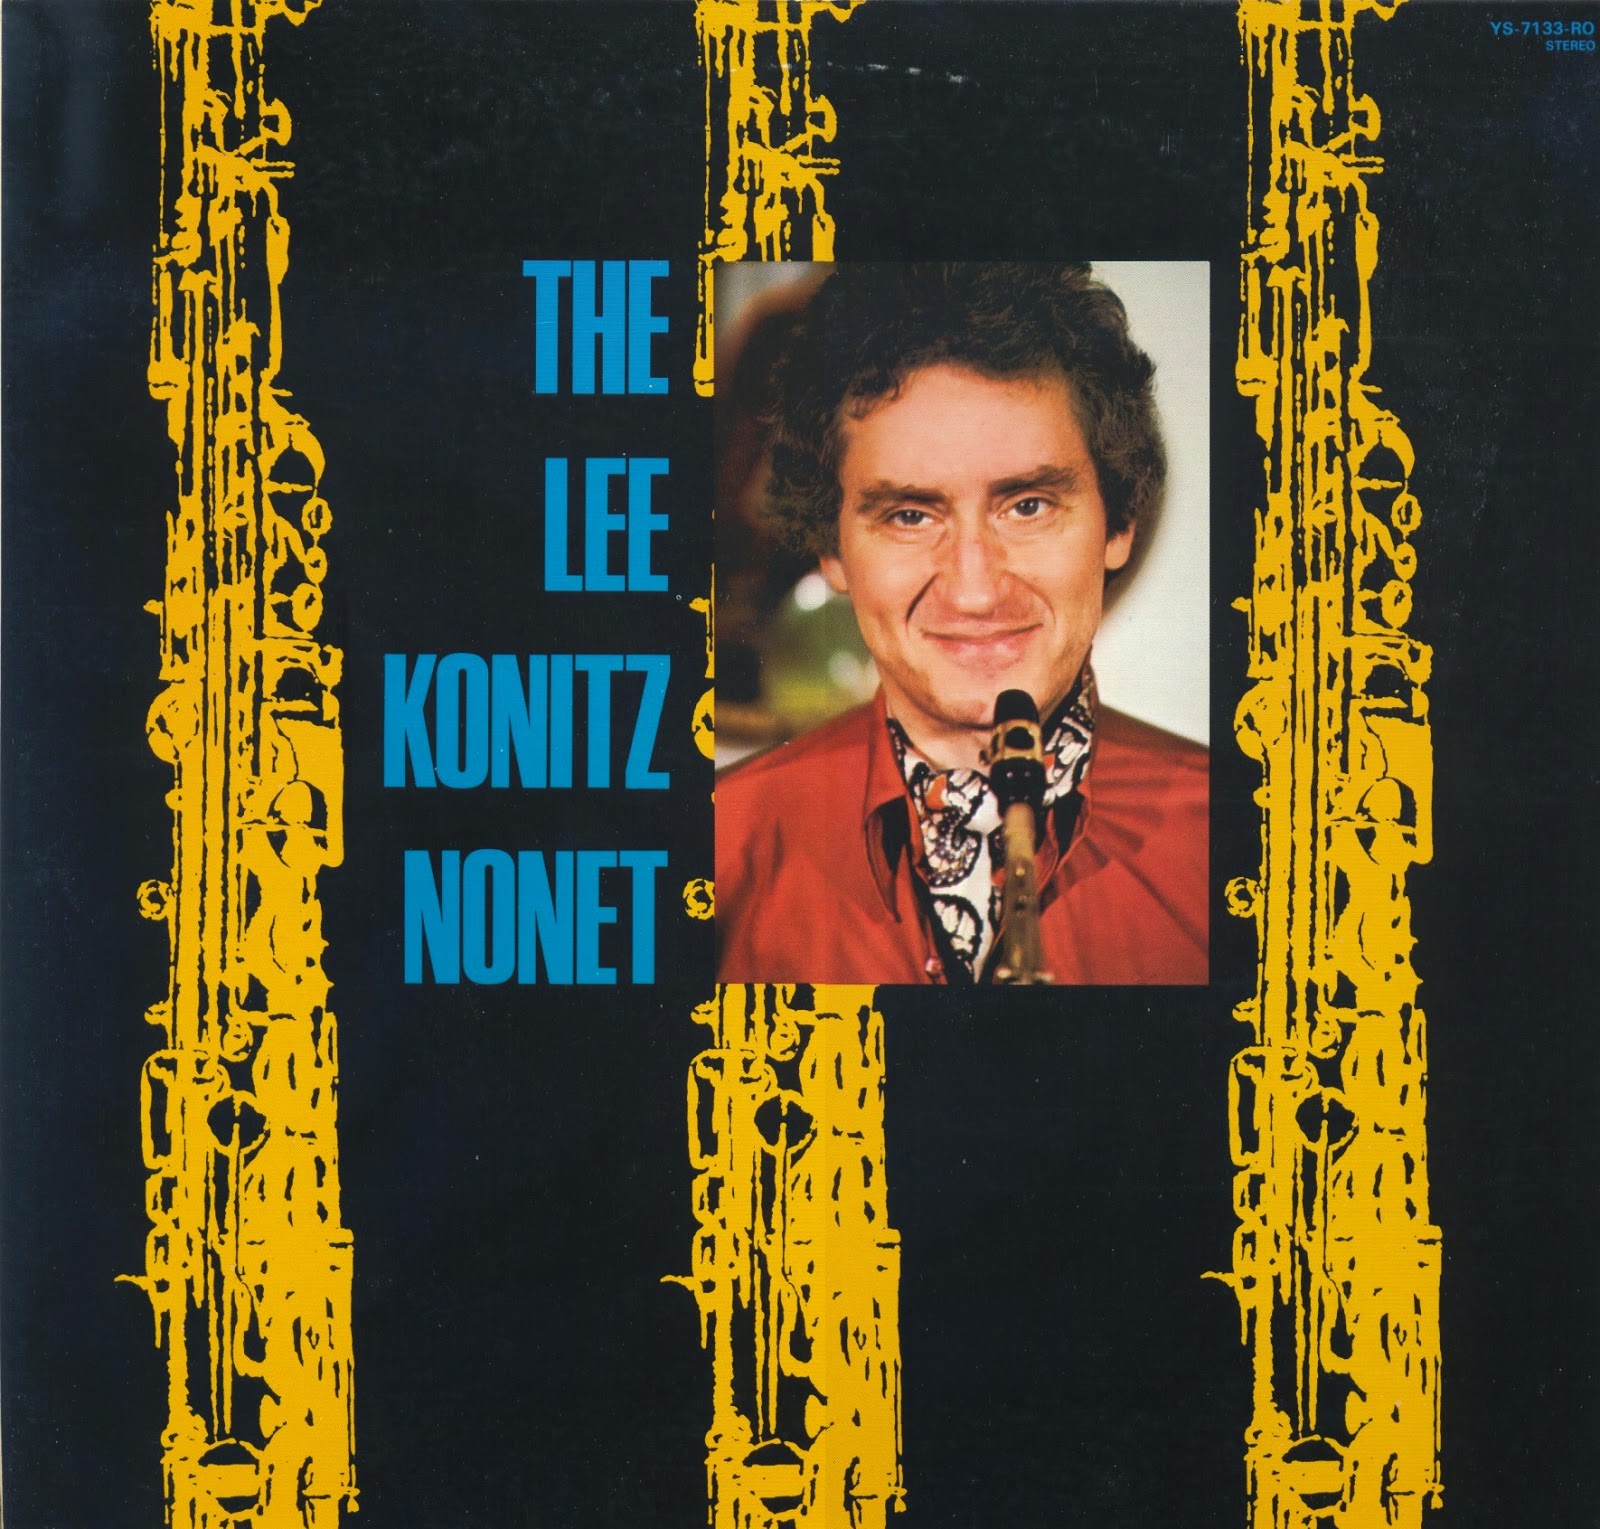 LEE KONITZ - The Lee Konitz Nonet cover 